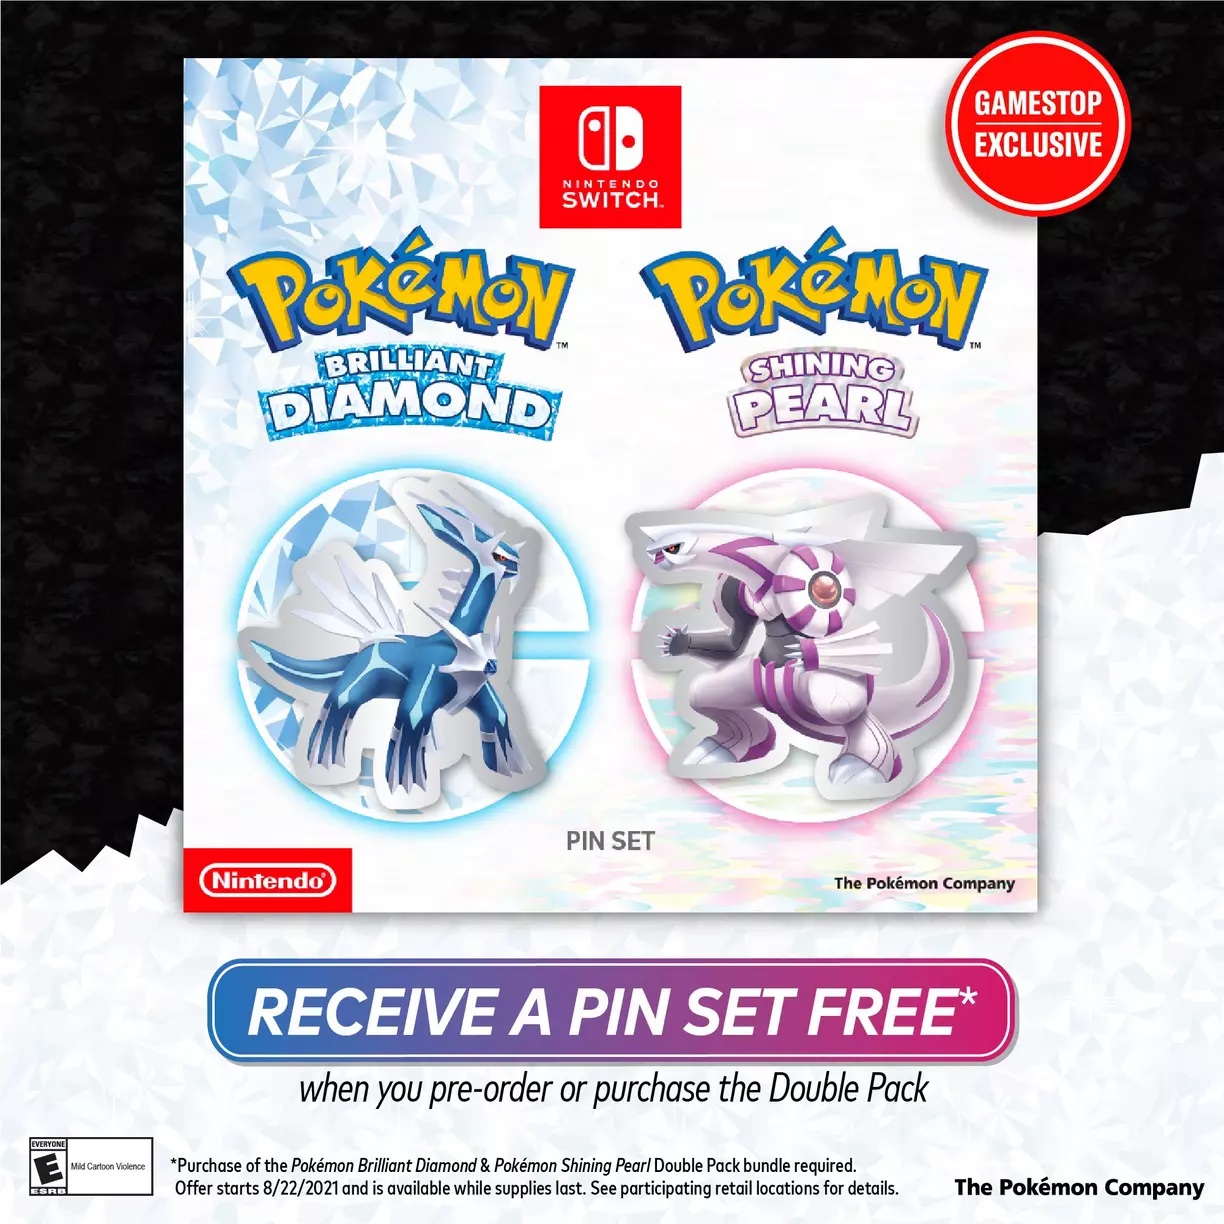 Pokémon Brilliant Diamond and Shining Pearl for Nintendo Switch